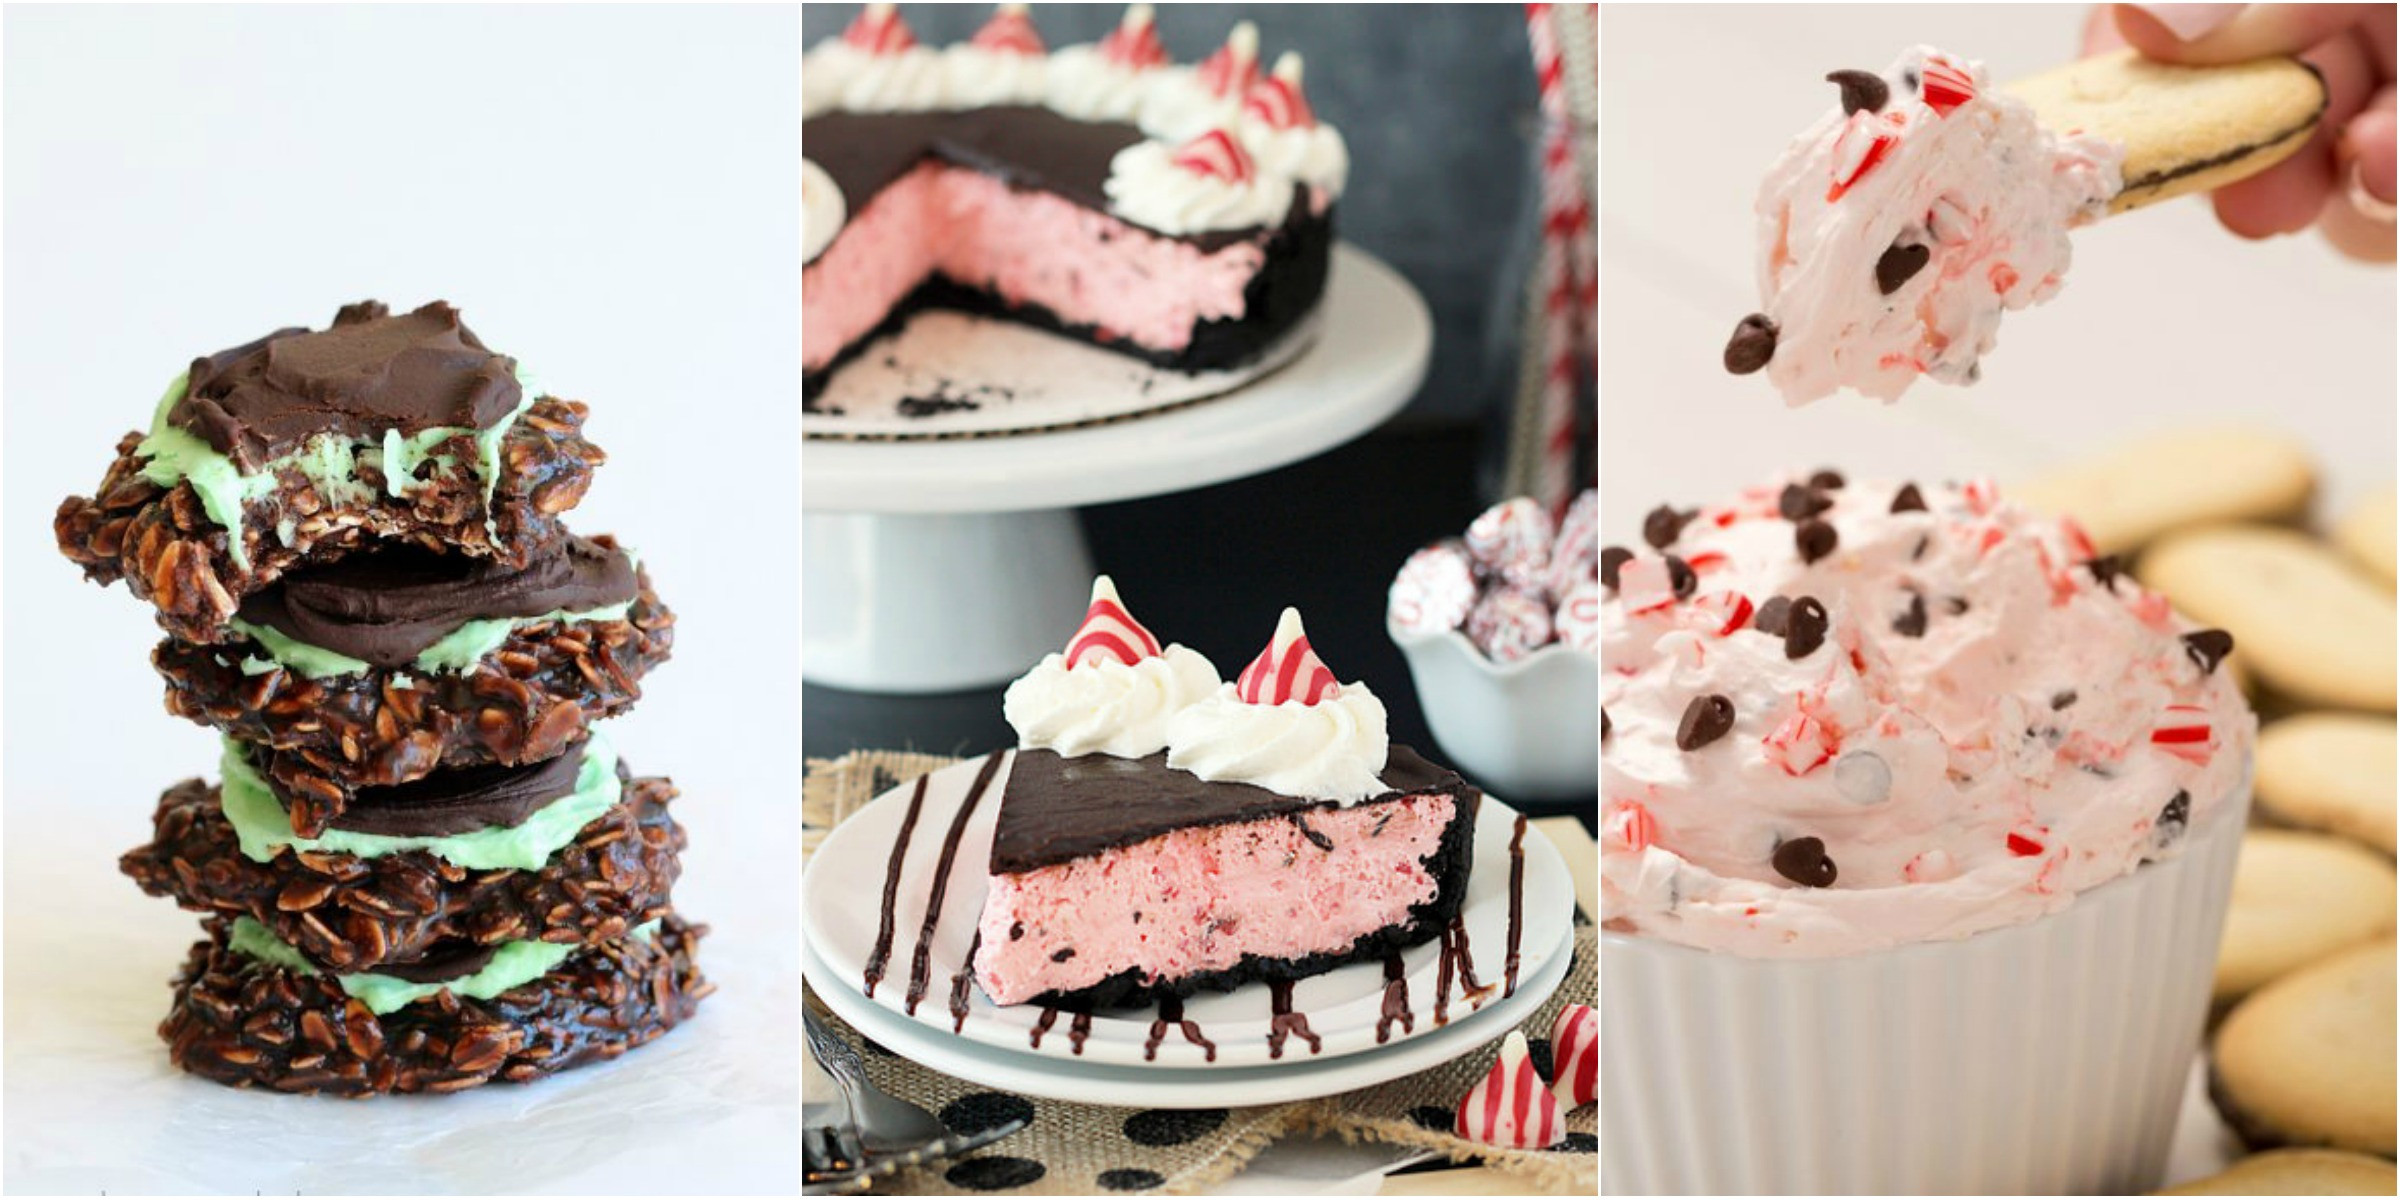 Fun Christmas Baking Ideas
 26 Best No Bake Christmas Desserts – Ideas for No Bake